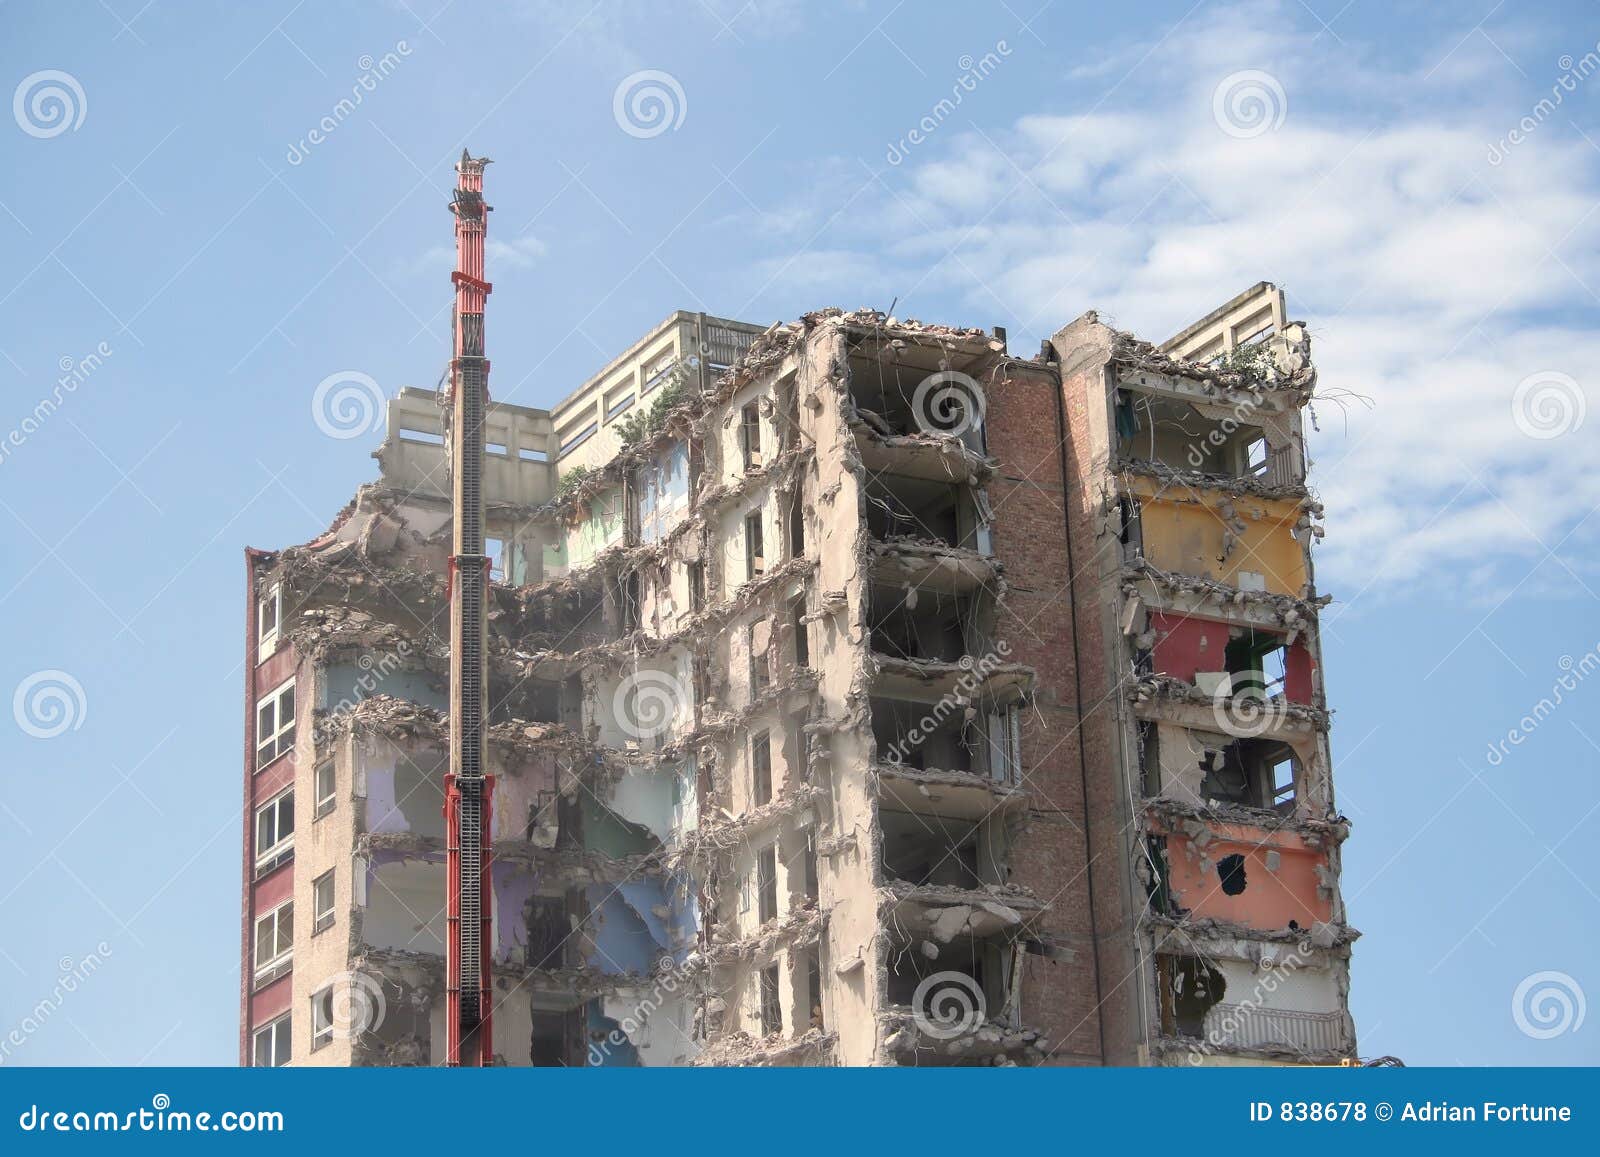 demolition of flats